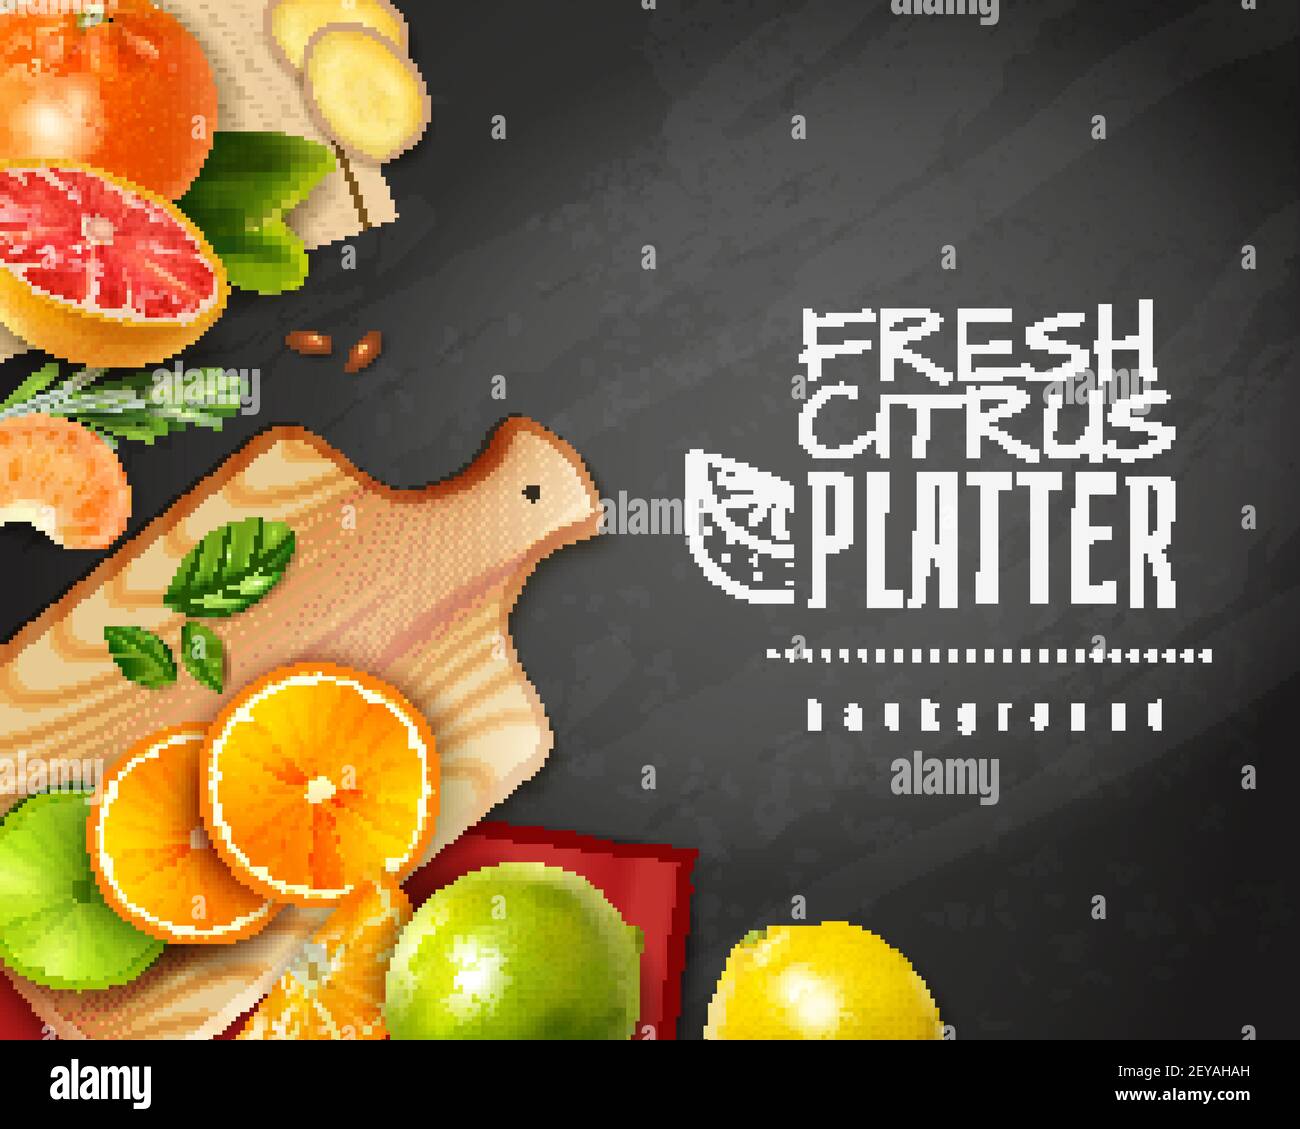 https://c8.alamy.com/comp/2EYAHAH/realistic-sliced-citrus-fruits-on-chalkboard-background-vector-illustration-2EYAHAH.jpg